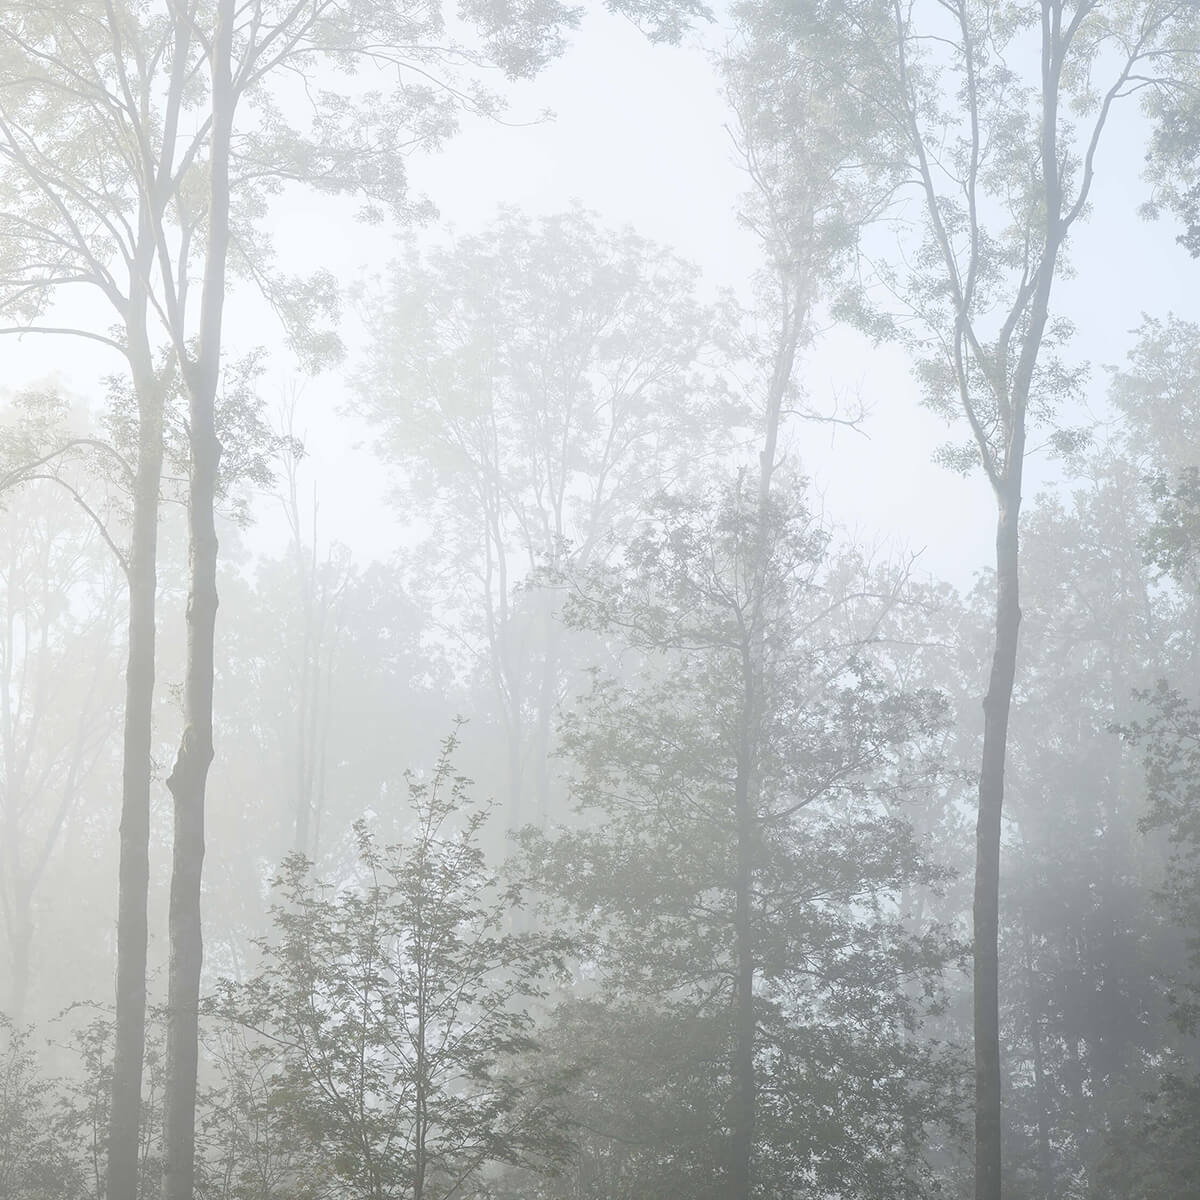 Dense fog in the forest